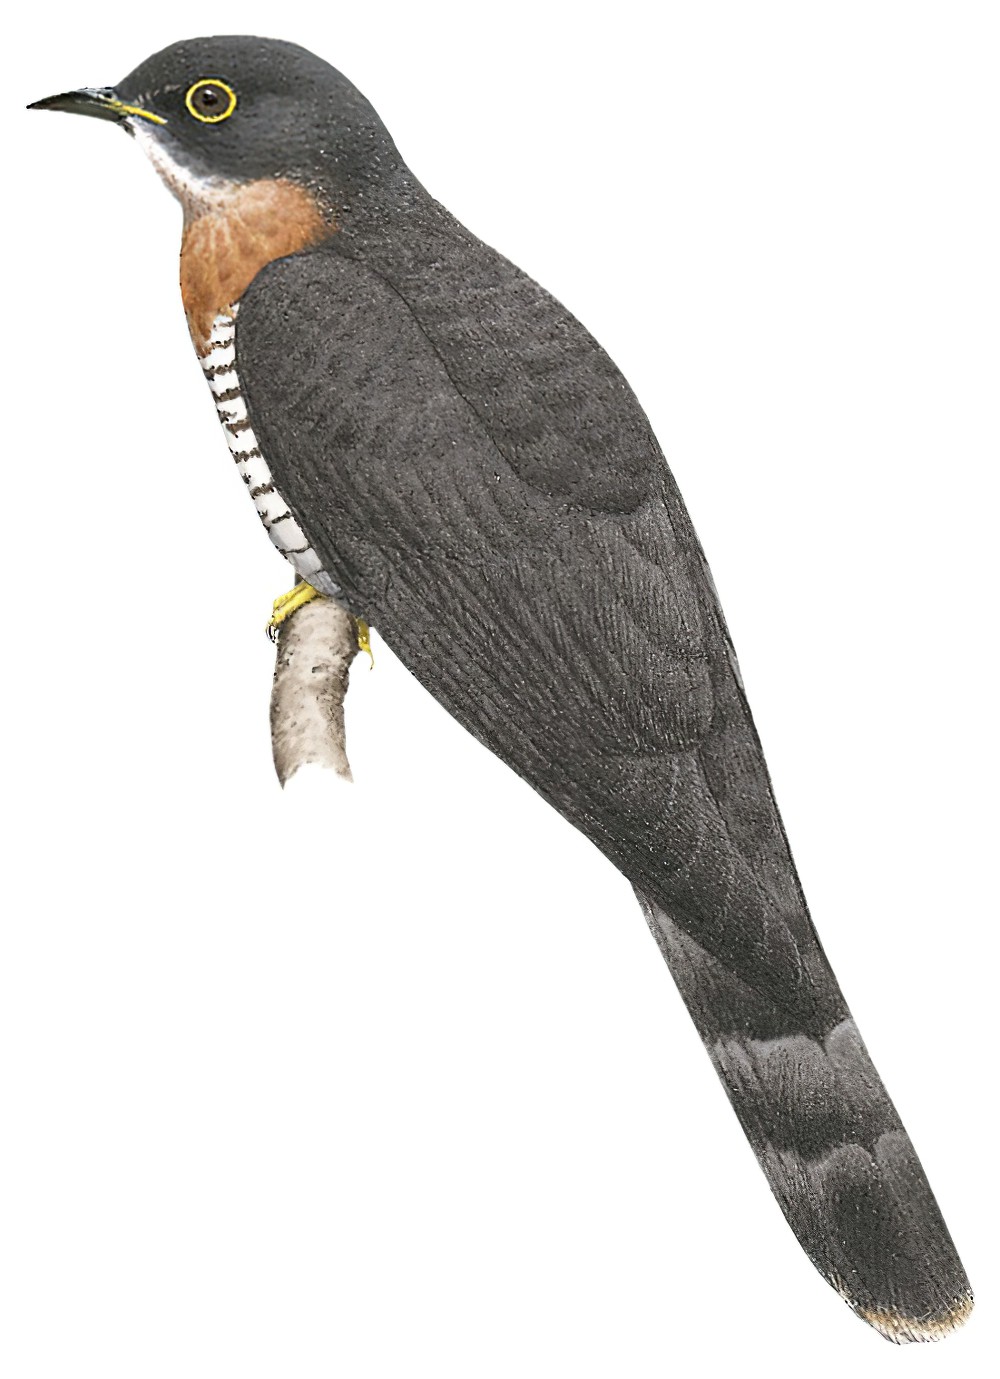 Dark Hawk-Cuckoo / Hierococcyx bocki